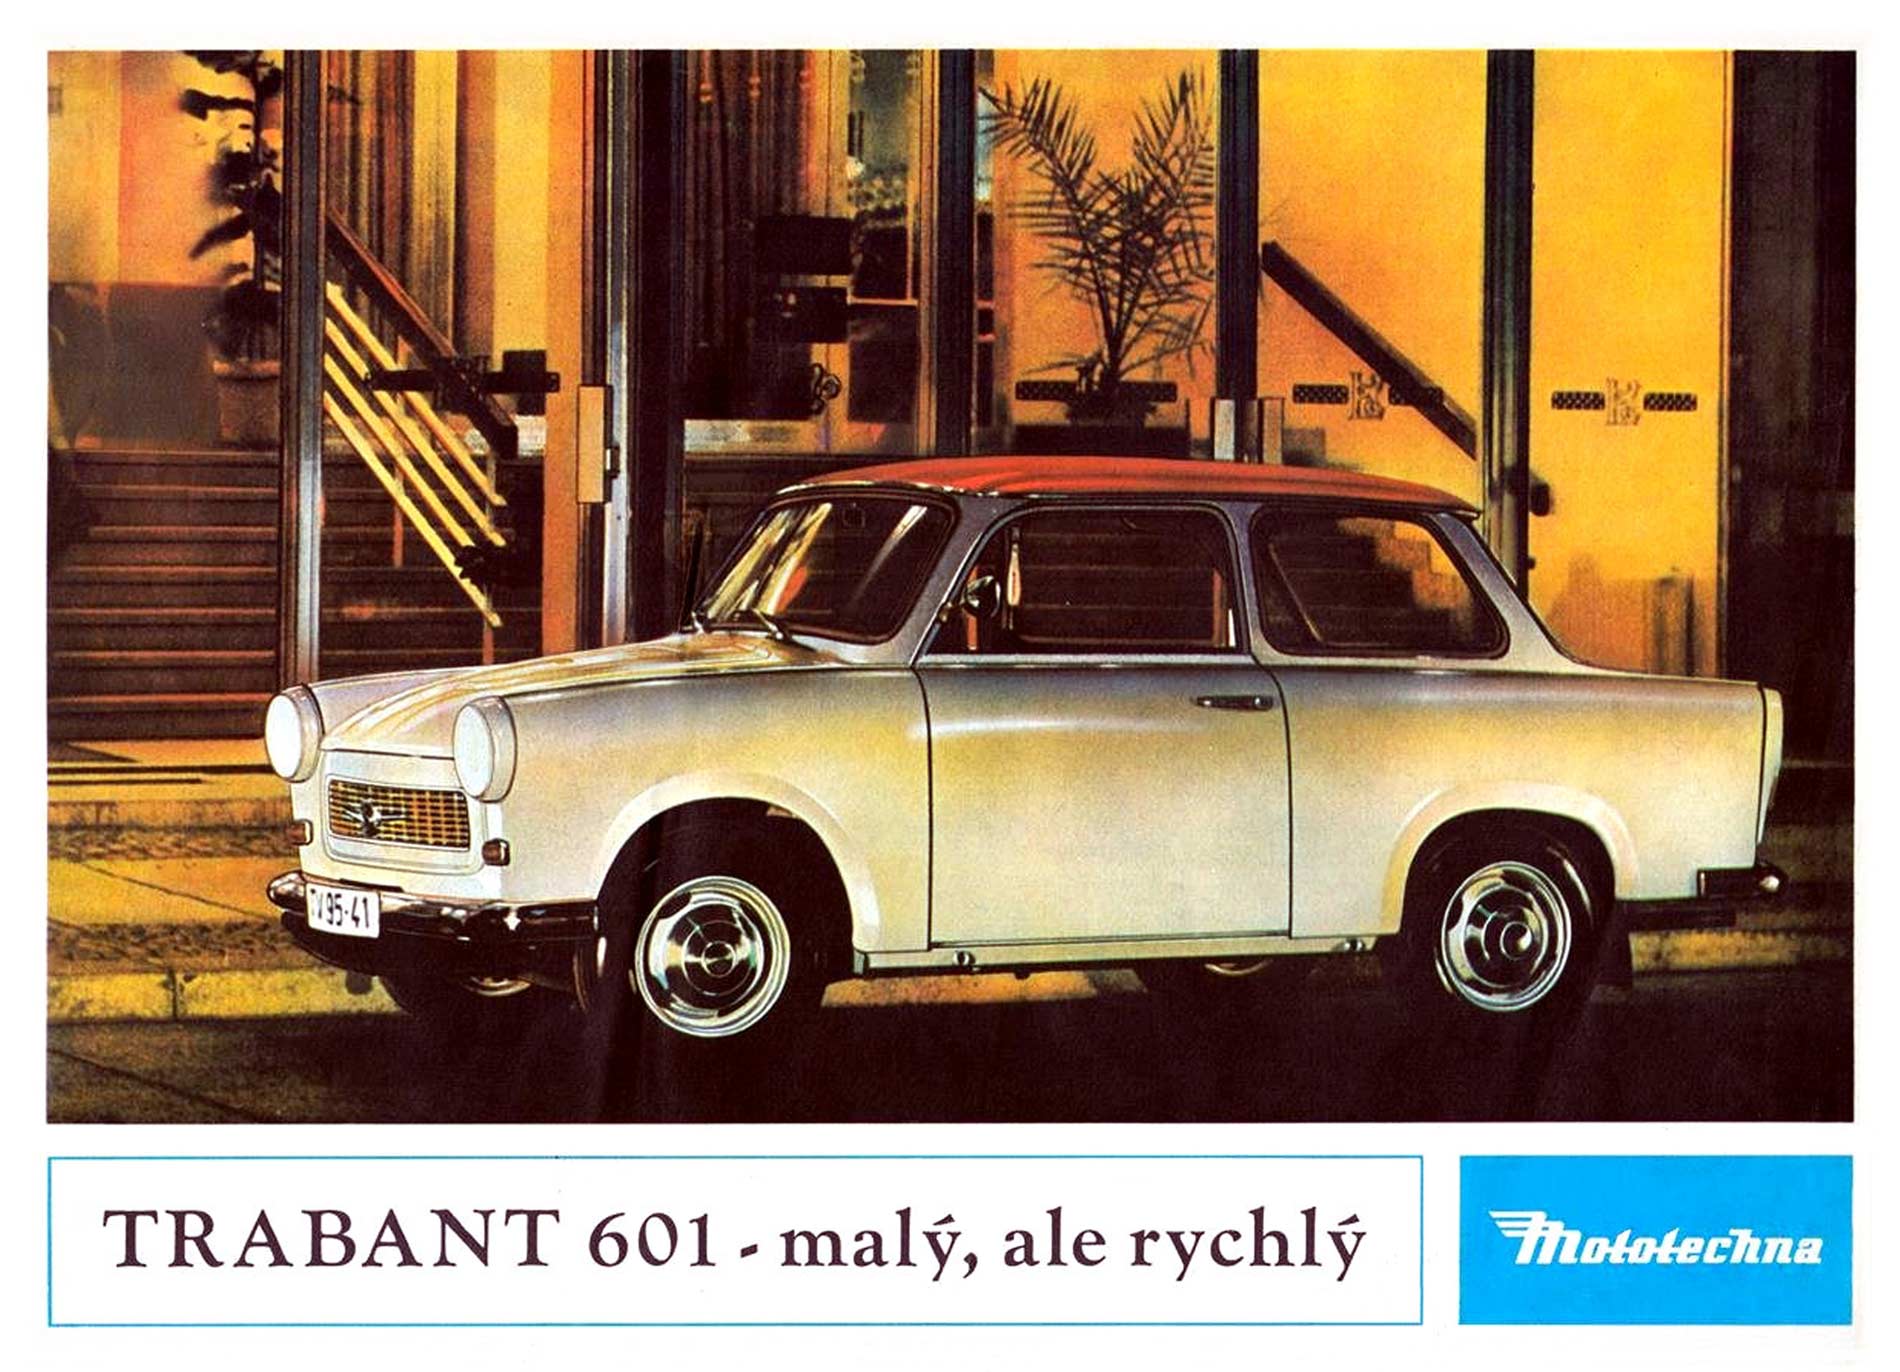 1968 - Trabant 601